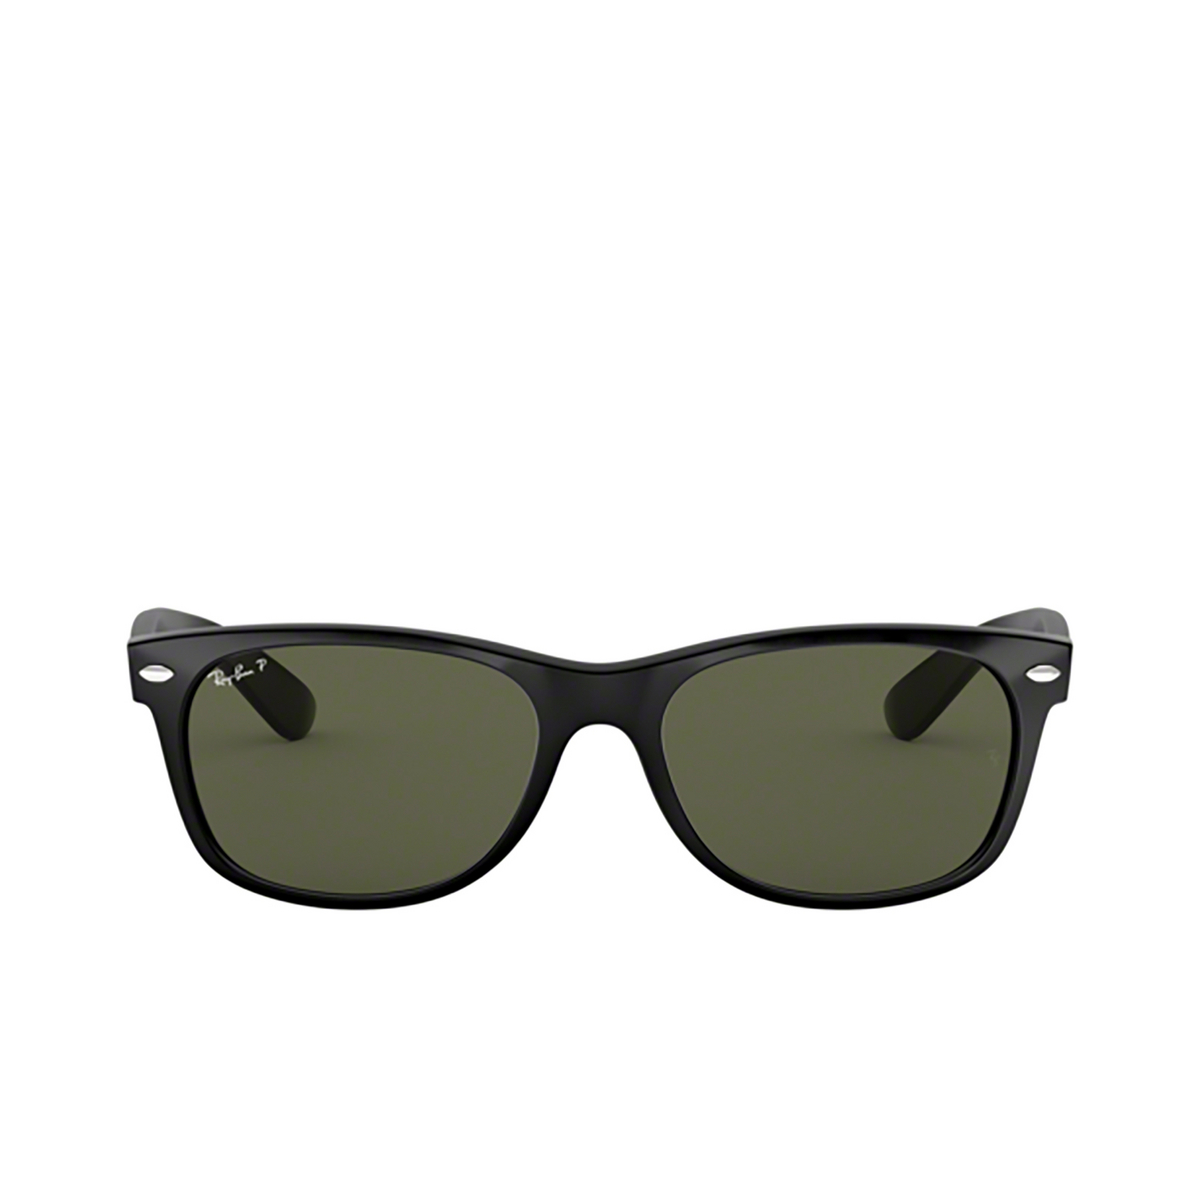 Ray-Ban NEW WAYFARER Sunglasses 901/58 BLACK - front view